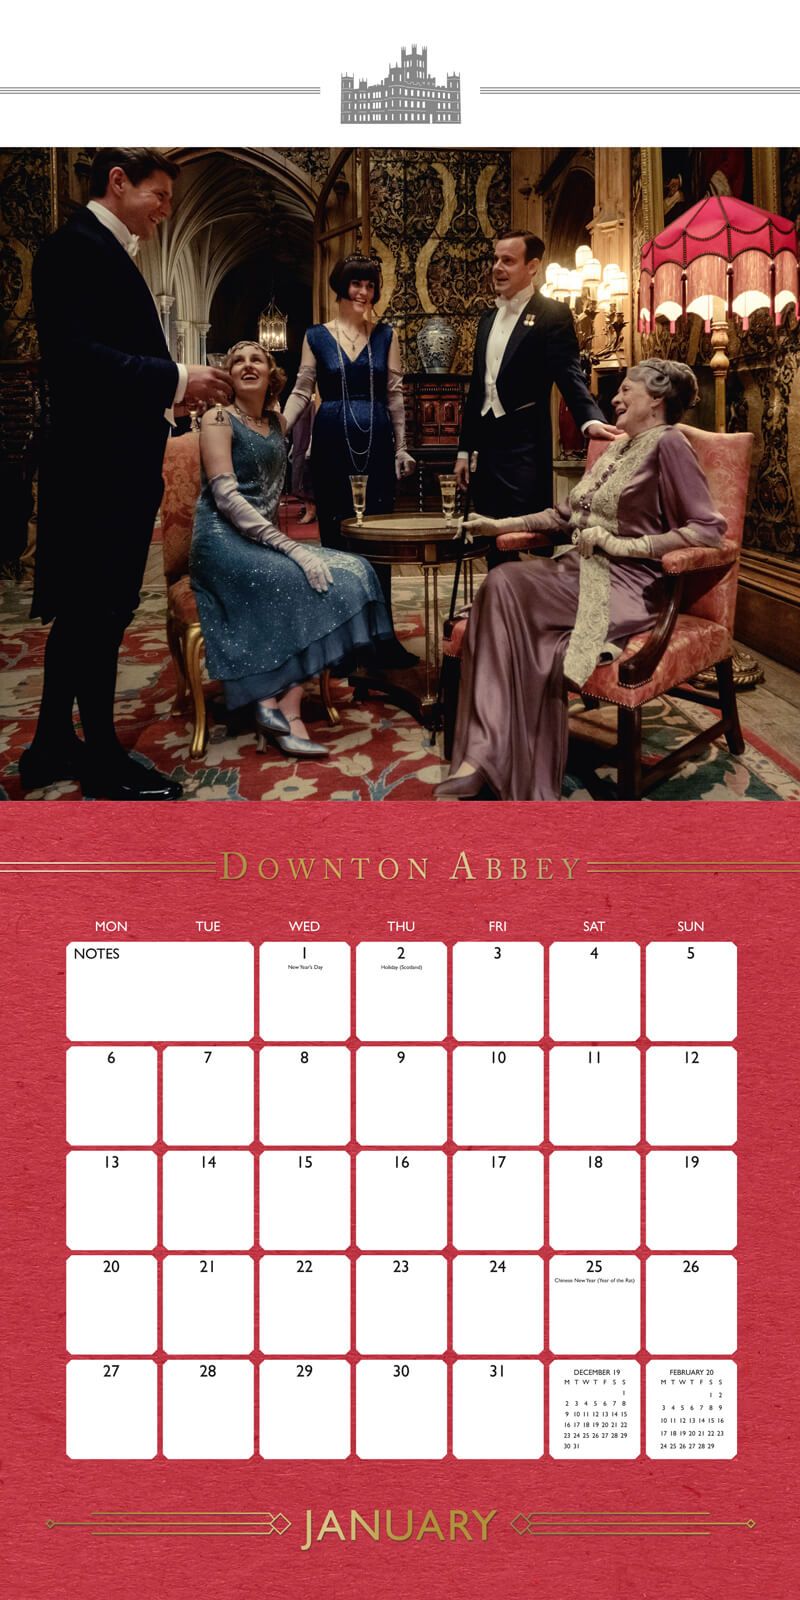 Kalendarz ścienny na 2020 rok z serialu Downton Abbey sklep Nice Wall